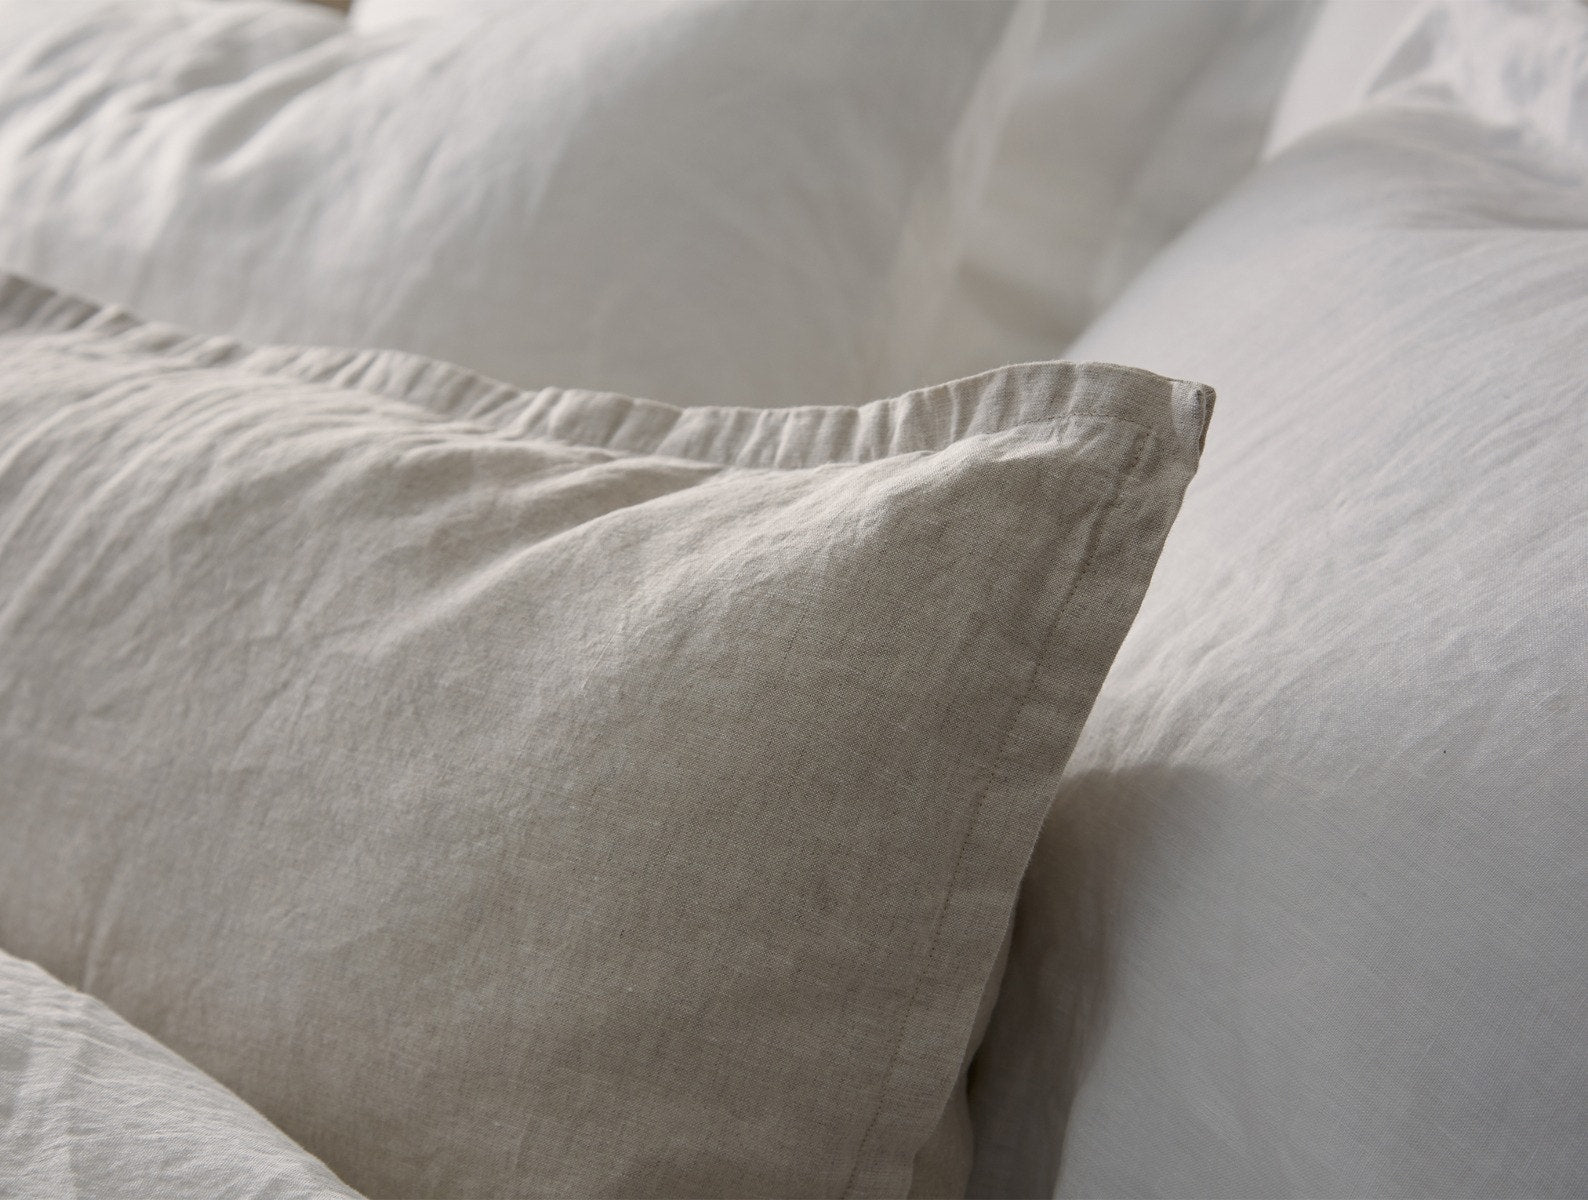 What is a Lumbar Pillow?